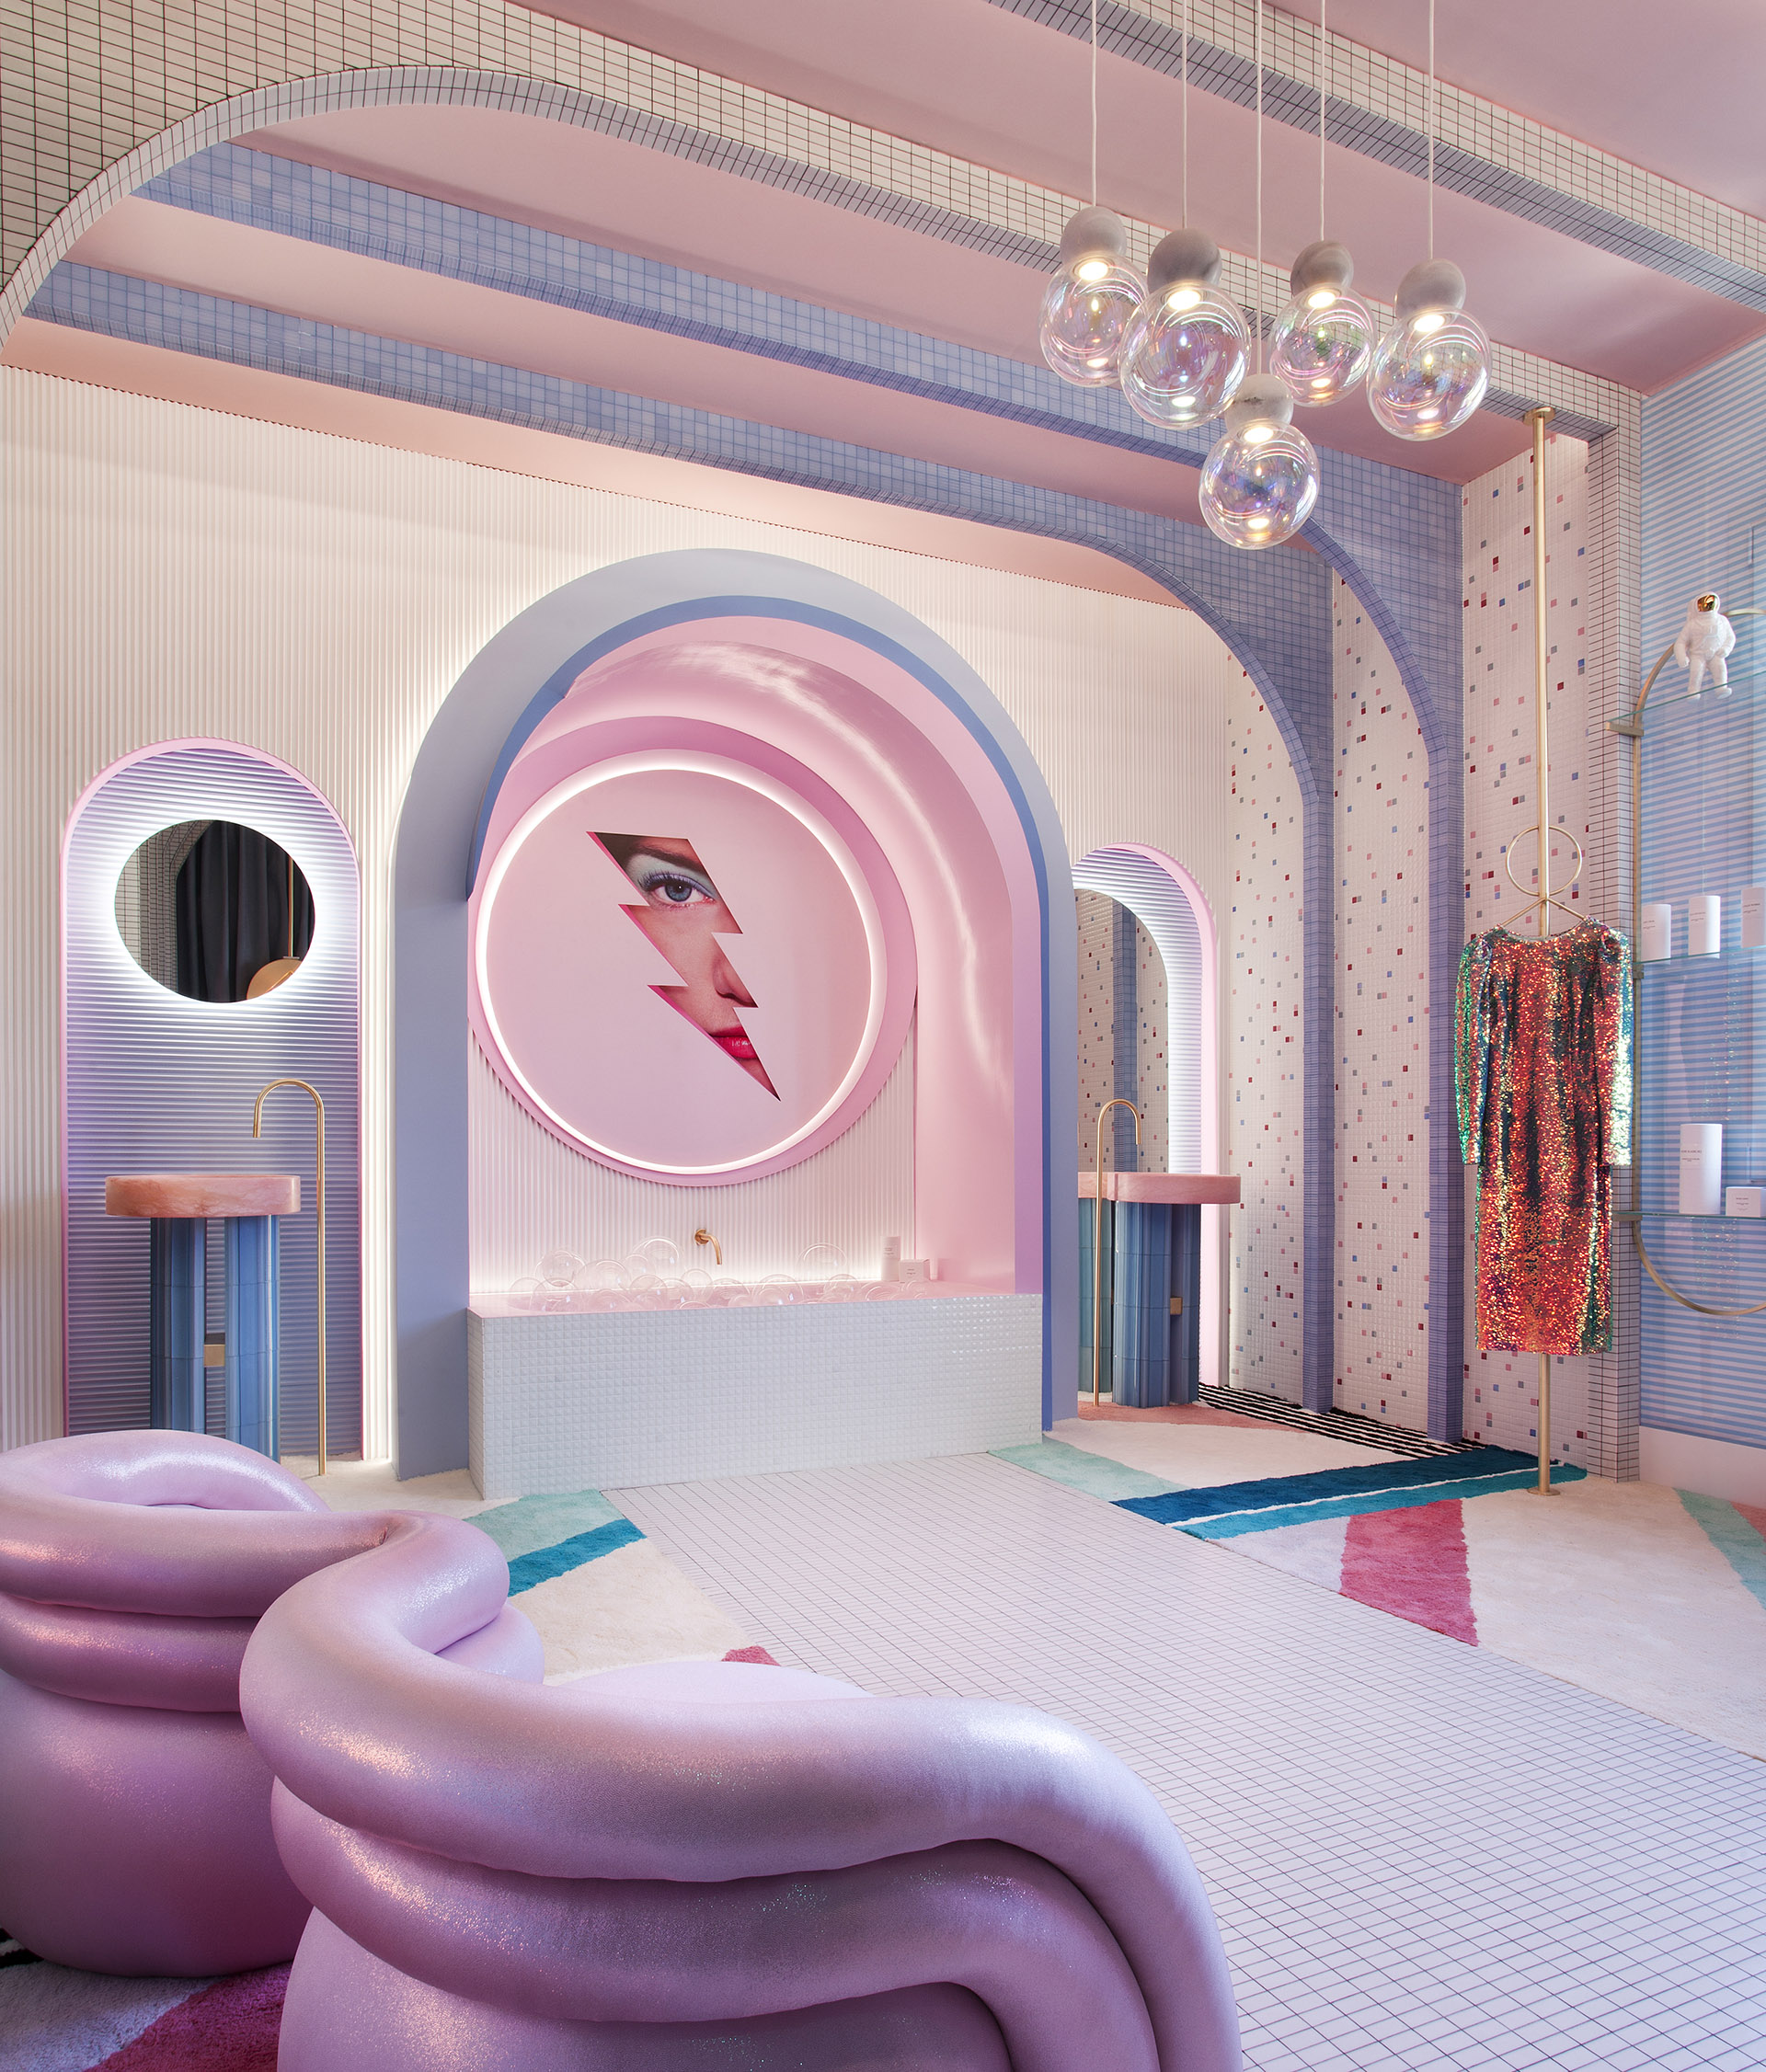 Wonder Galaxy for Casa Decor. A futuristic and playful installation that evokes childhood dreams